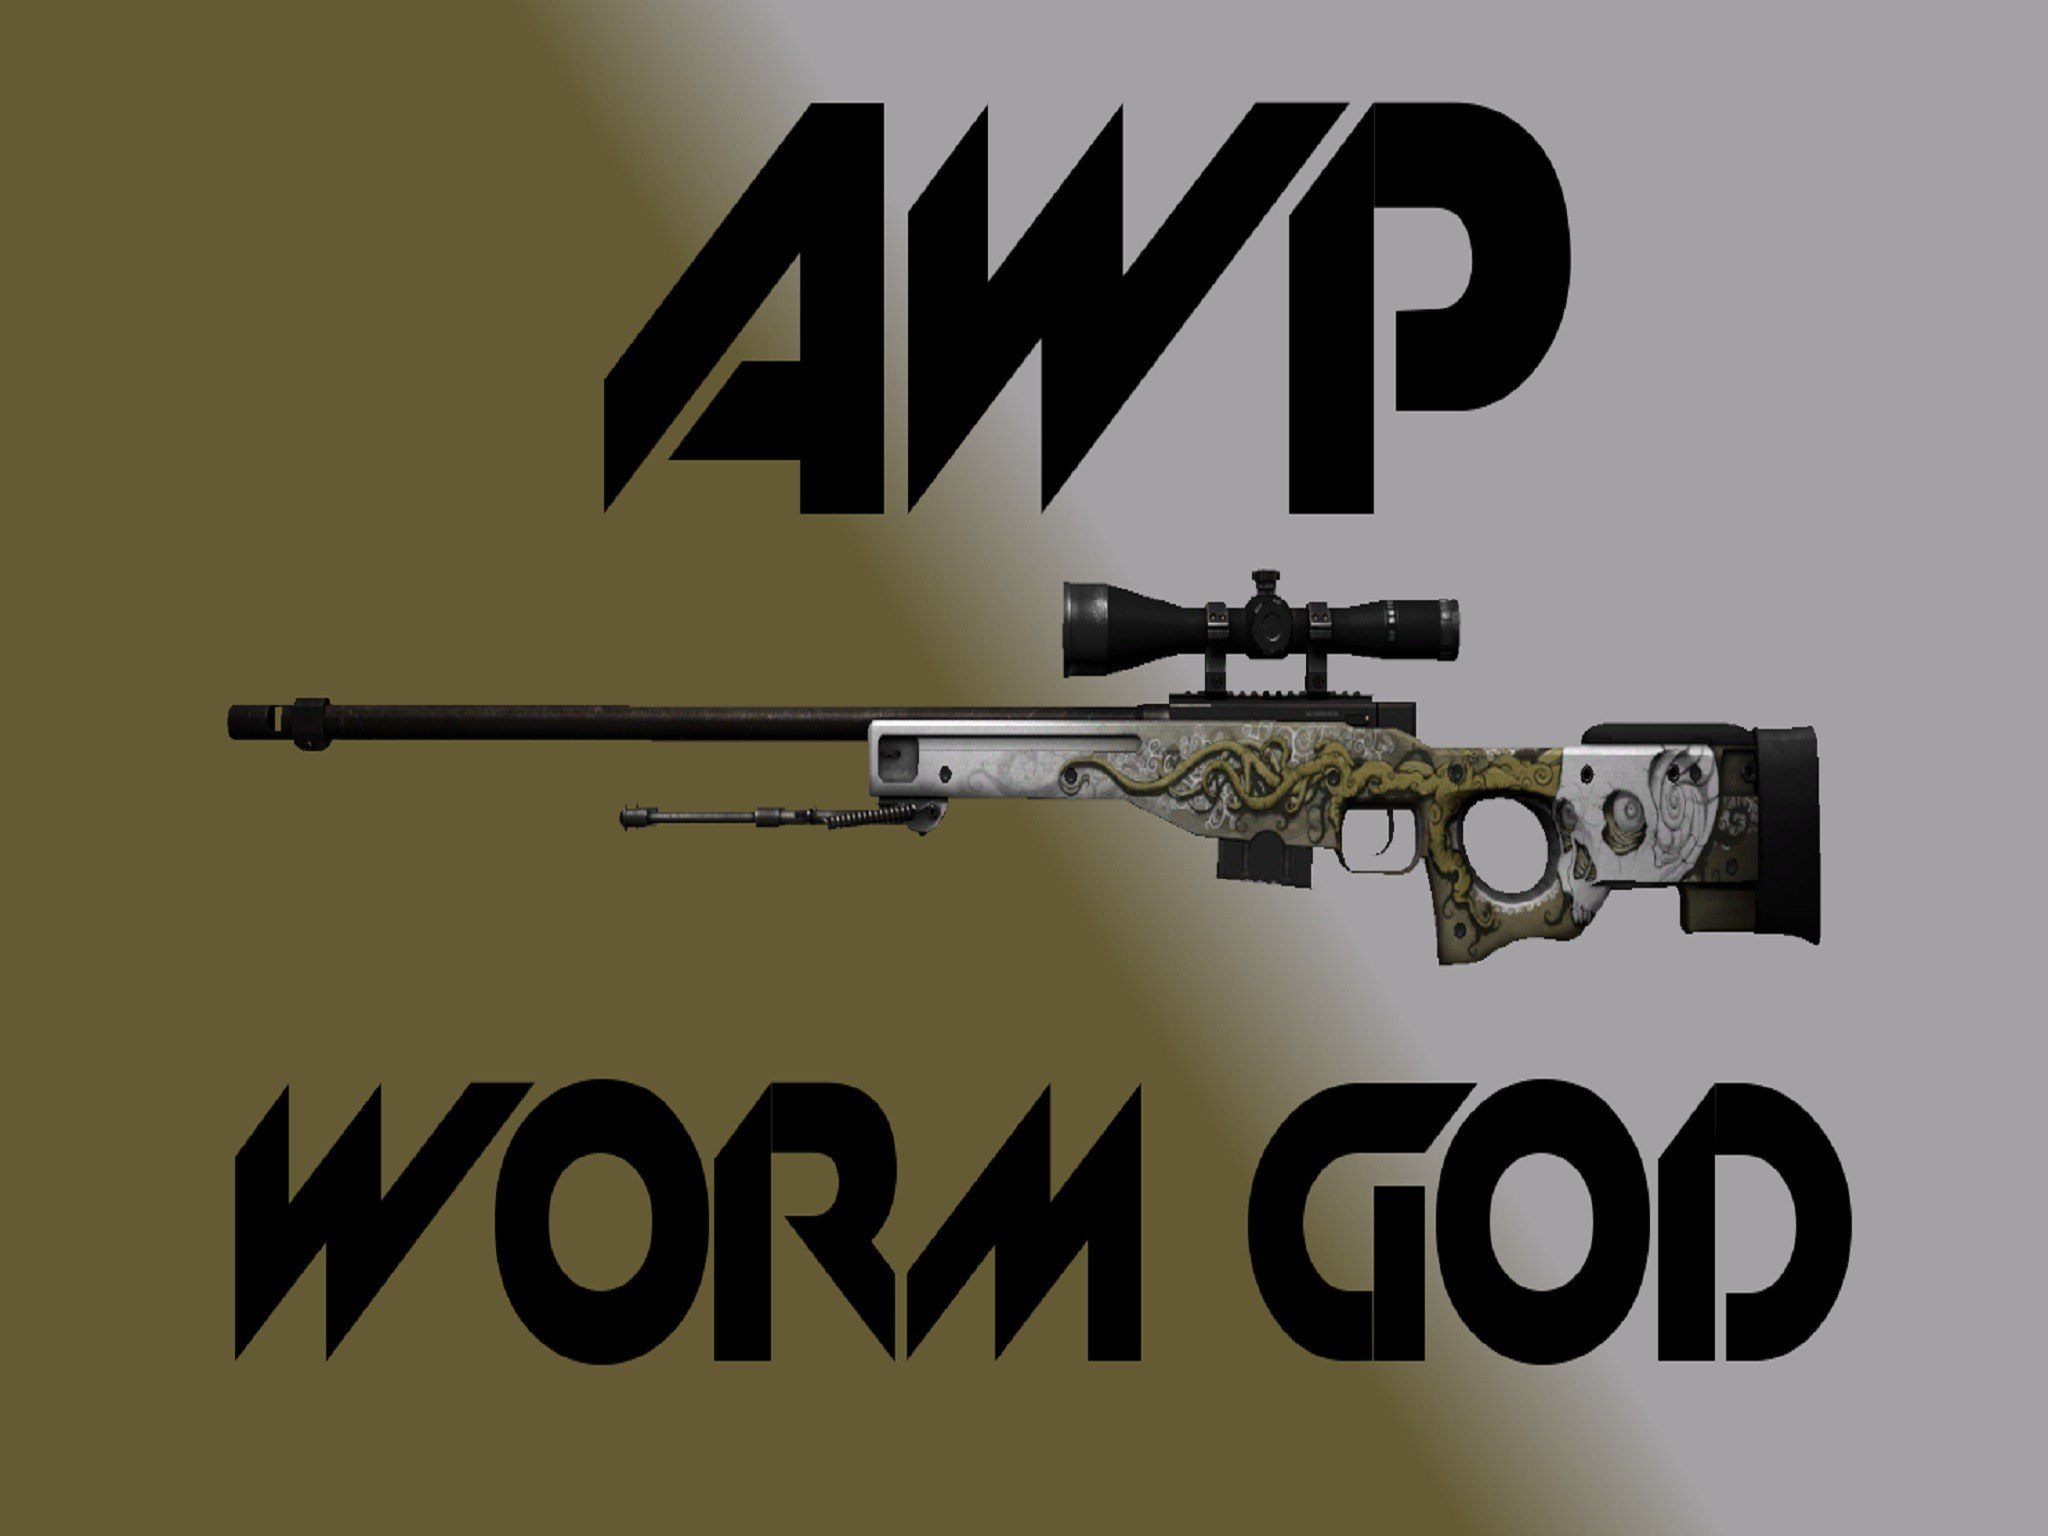 Awp worm god field фото 23